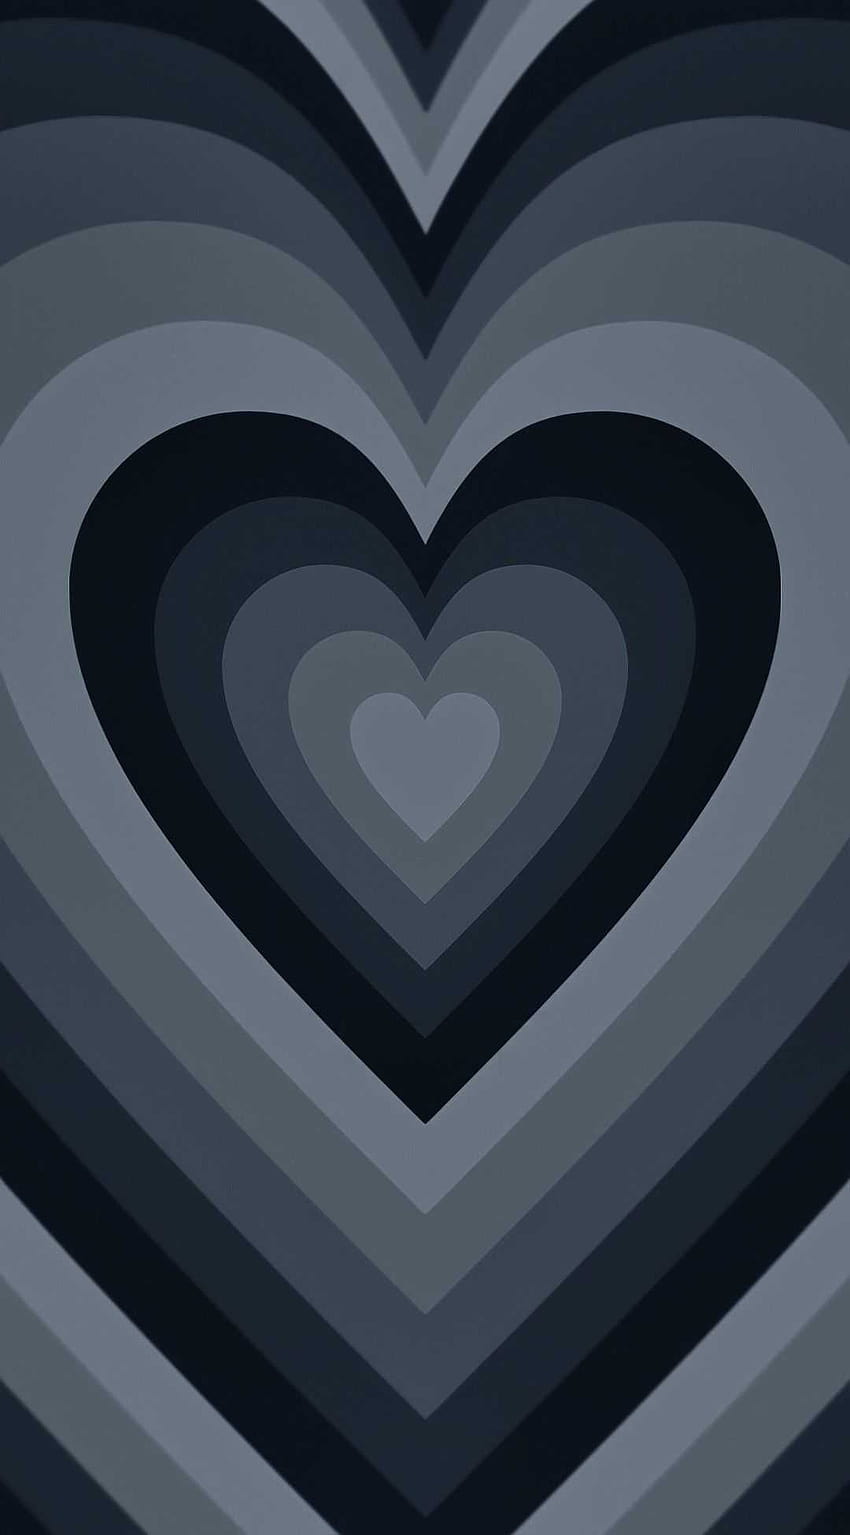 Abstract Black Heart  Hd Hd Black Background Love  1920x1200 Wallpaper   teahubio